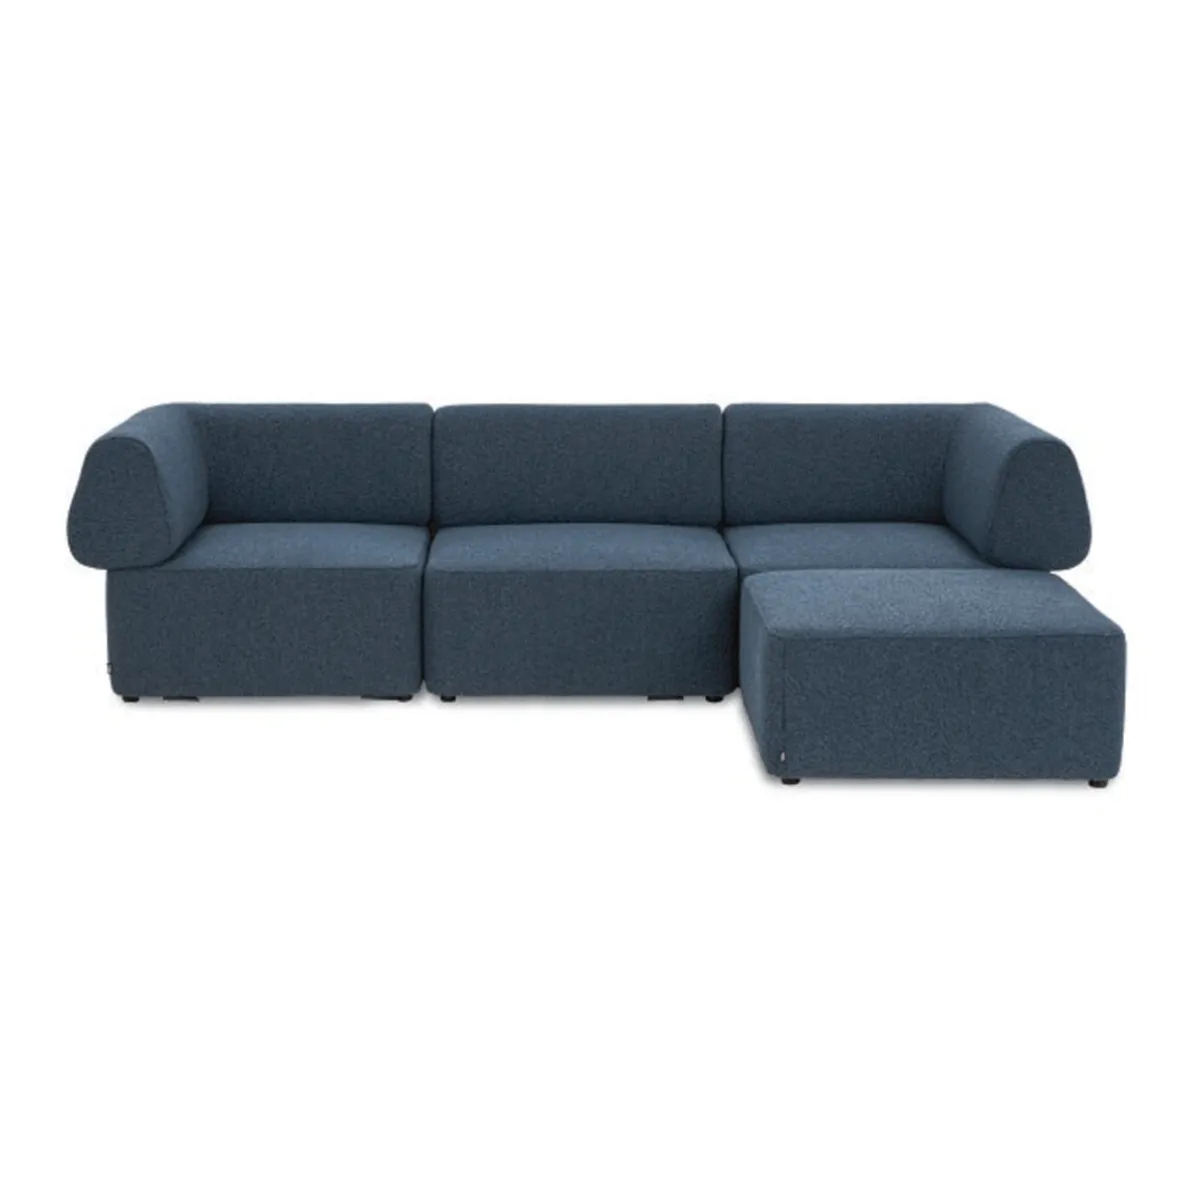 Corey modular sofa 2